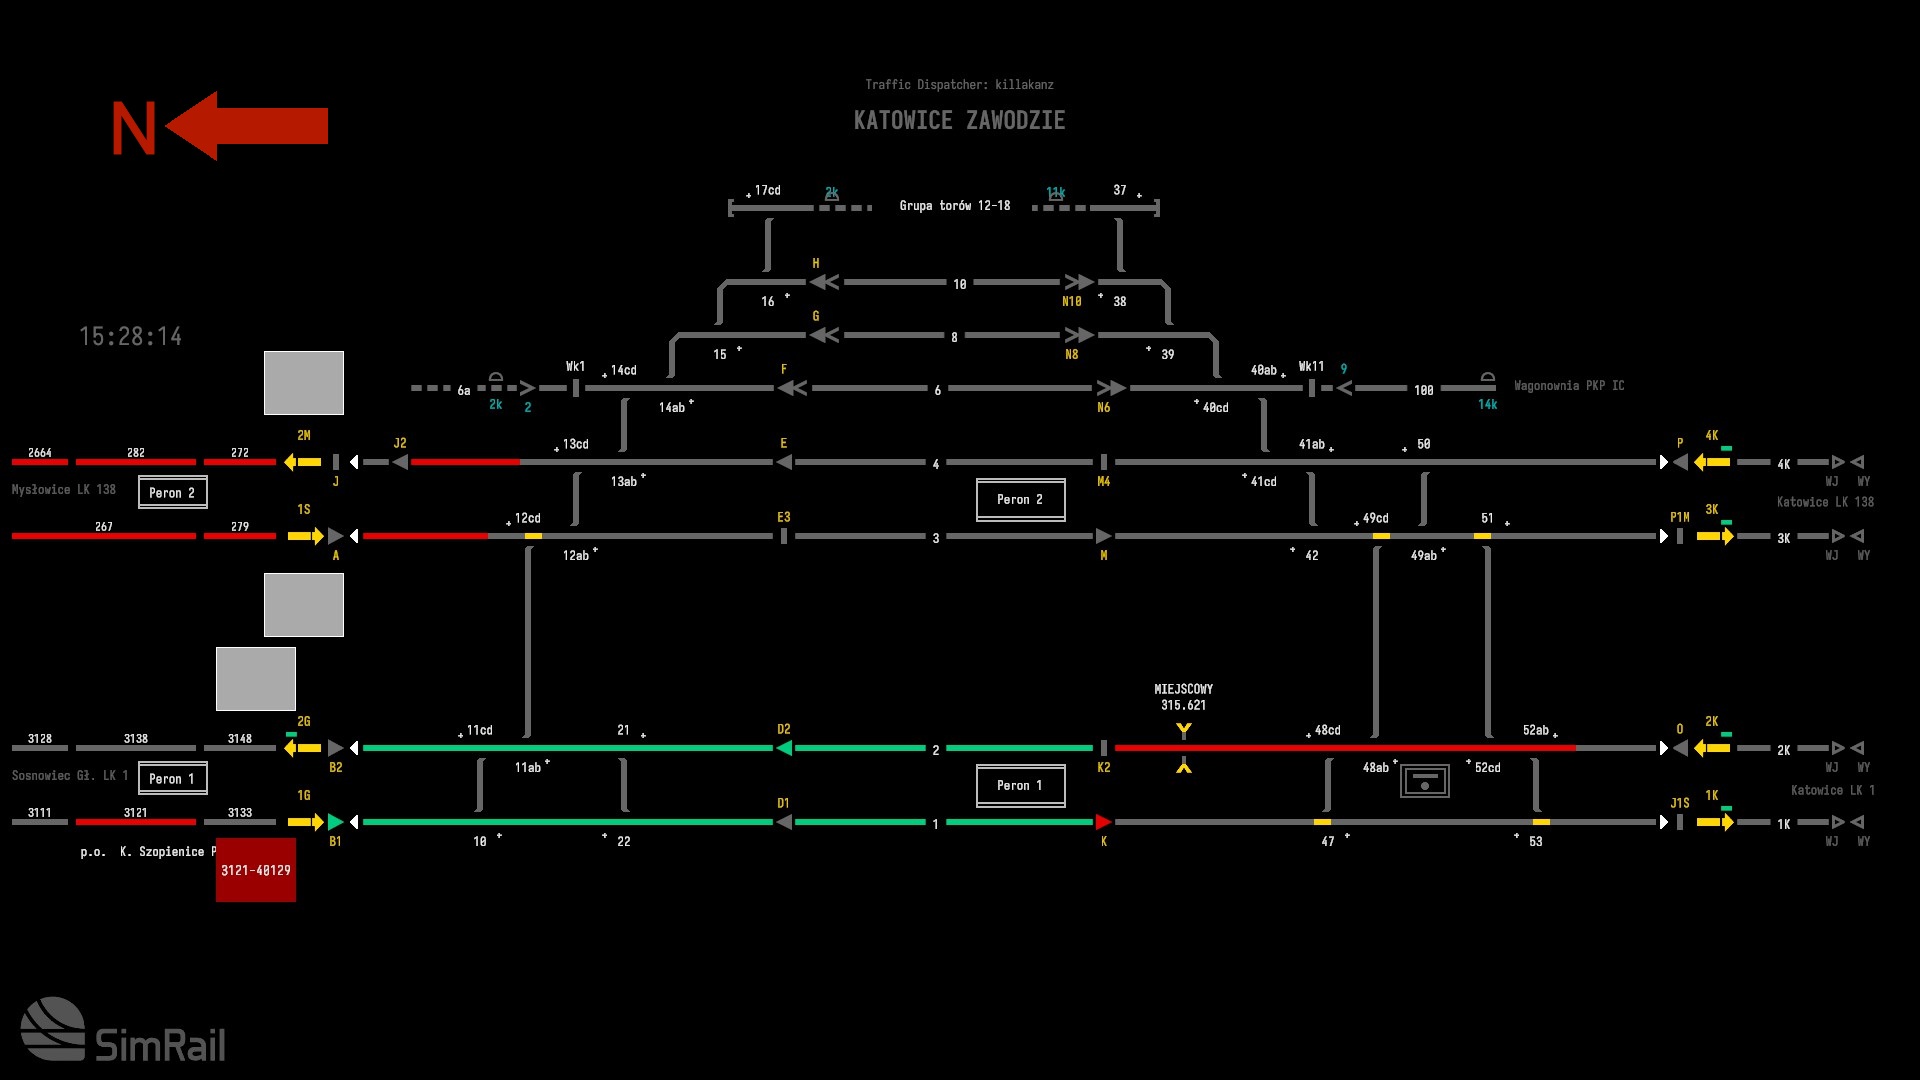 SimRail - The Railway Simulator - Basic Dispatching Full Guide - Katowice Zawodzie - In Detail (computerised) - E502272